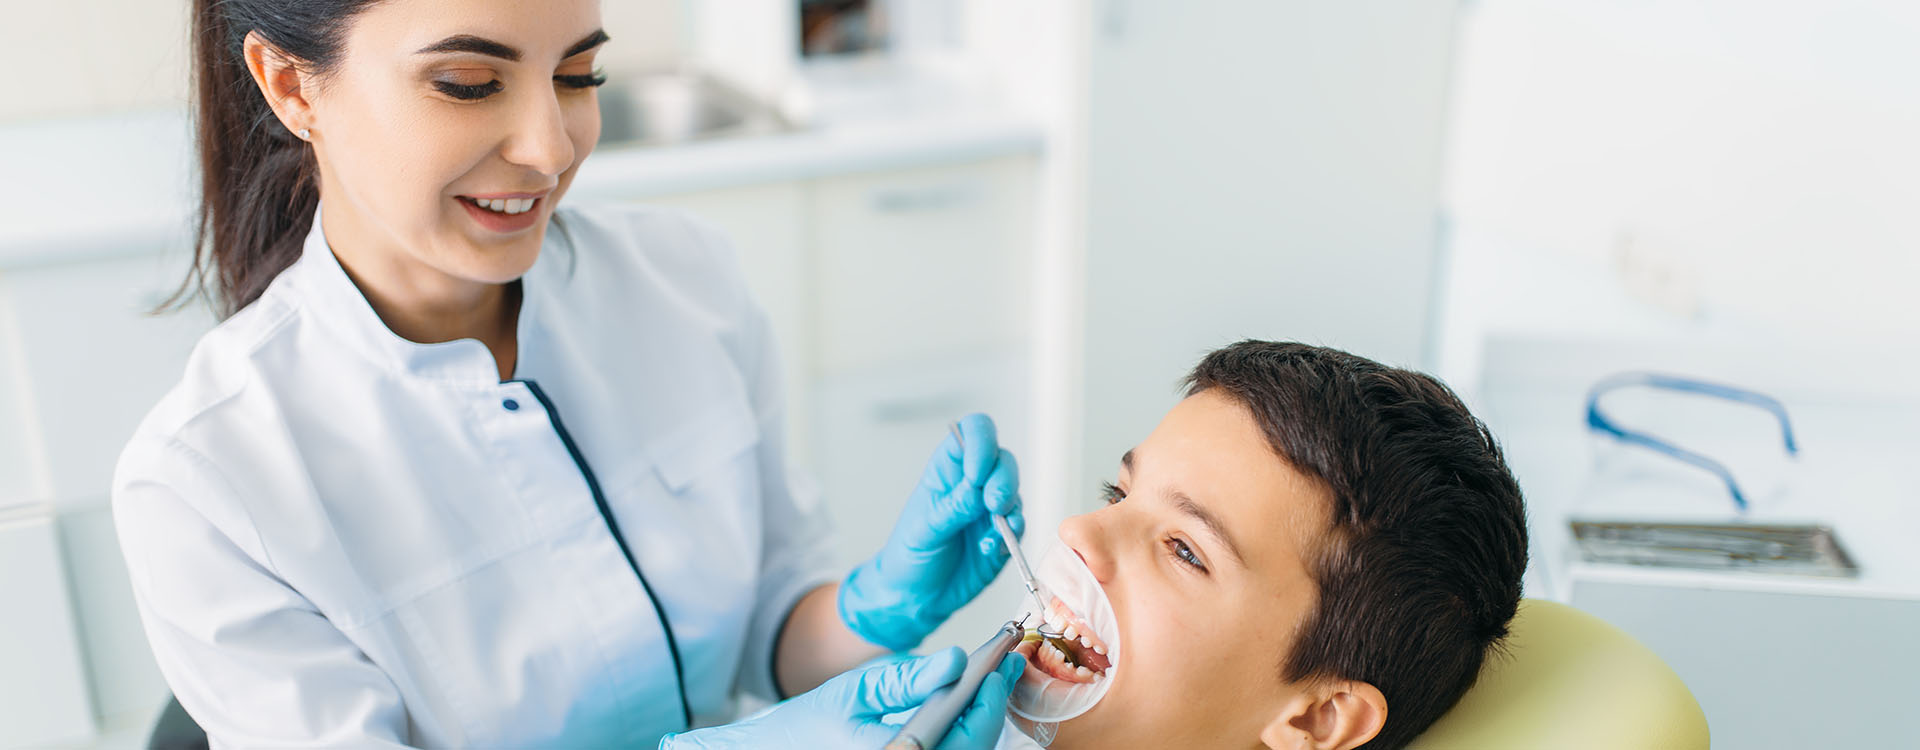 Clínica Dental Andrea Compte, tu Centro Odontológico especializado. Odontopediatría en Alcossebre. Odontología pediátrica, instalación de sellos.